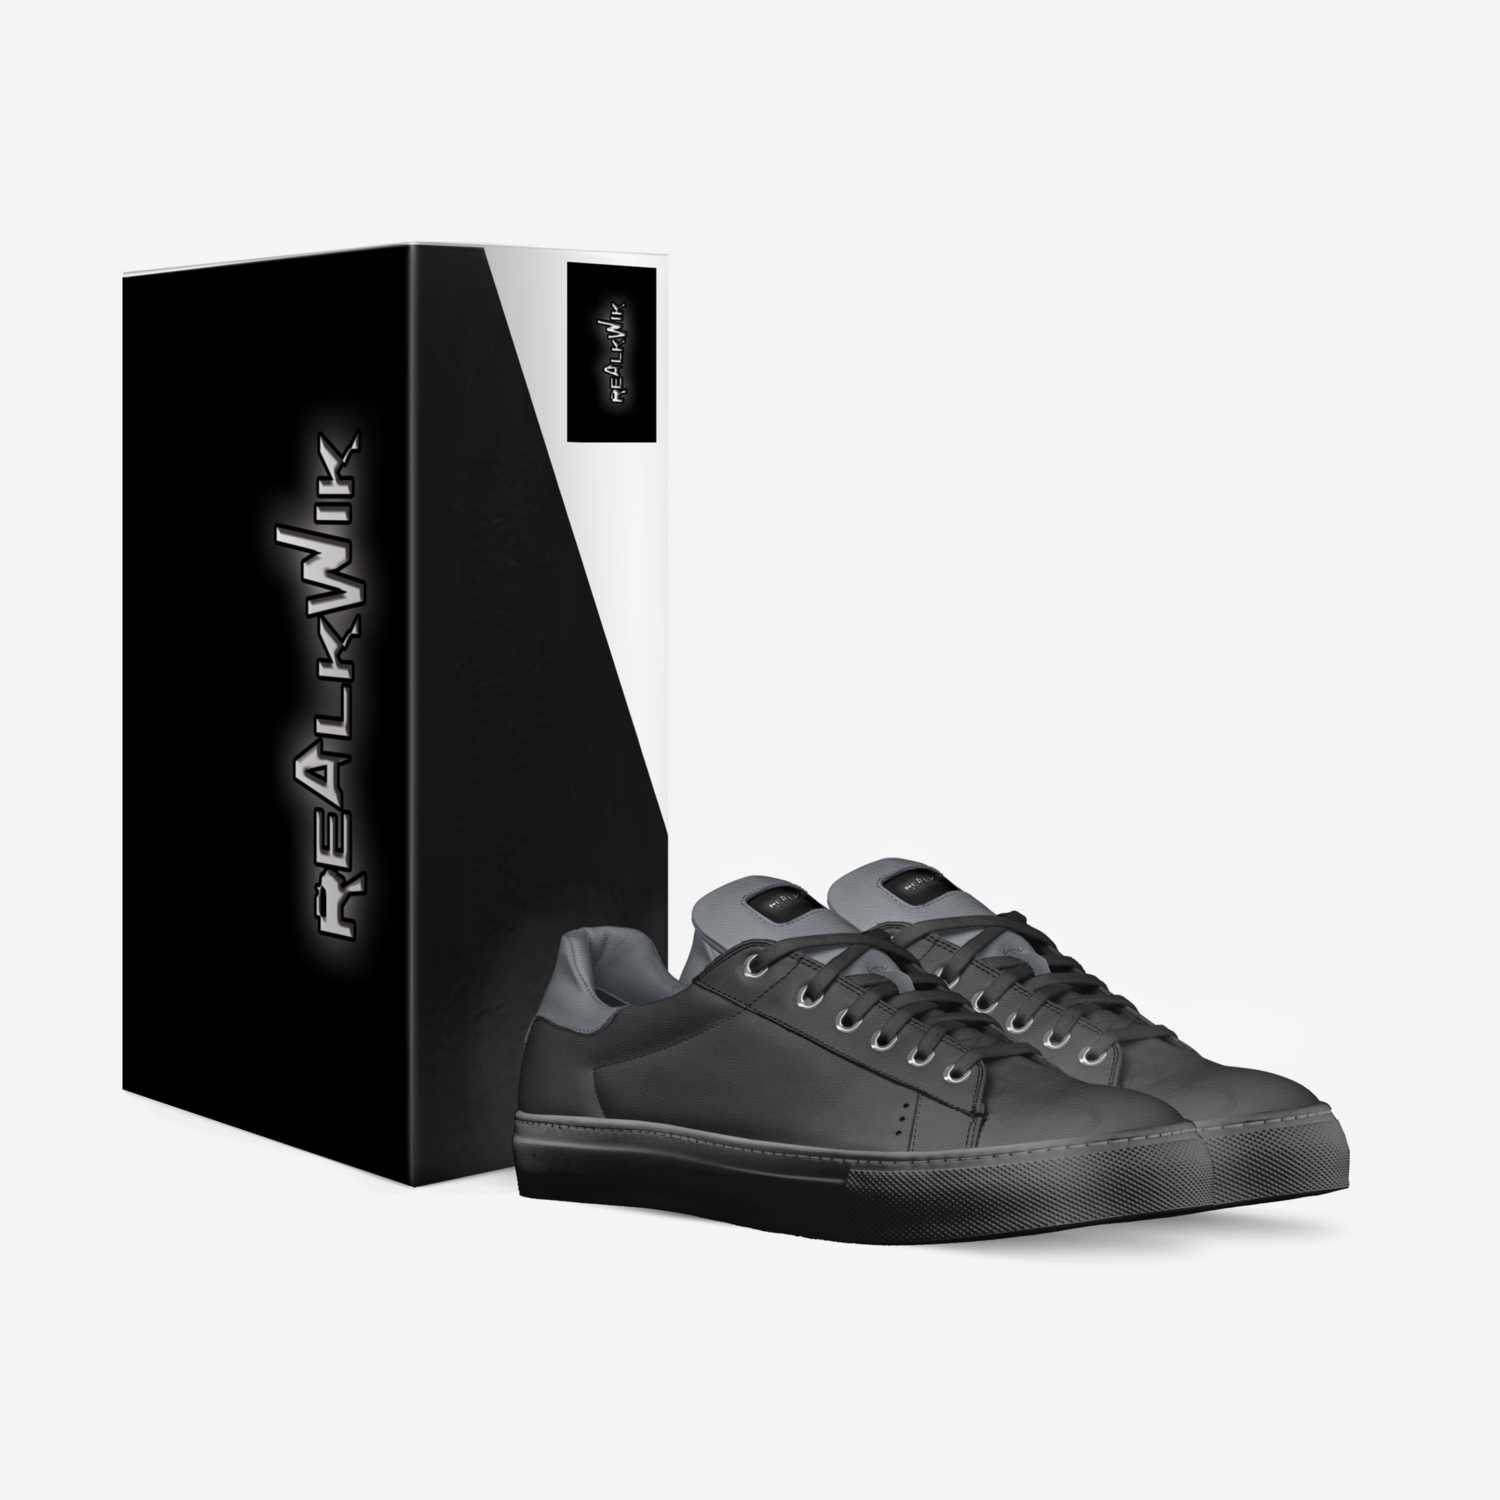 Real Kwik Original custom made in Italy shoes by Real Kwik Originals | Box view